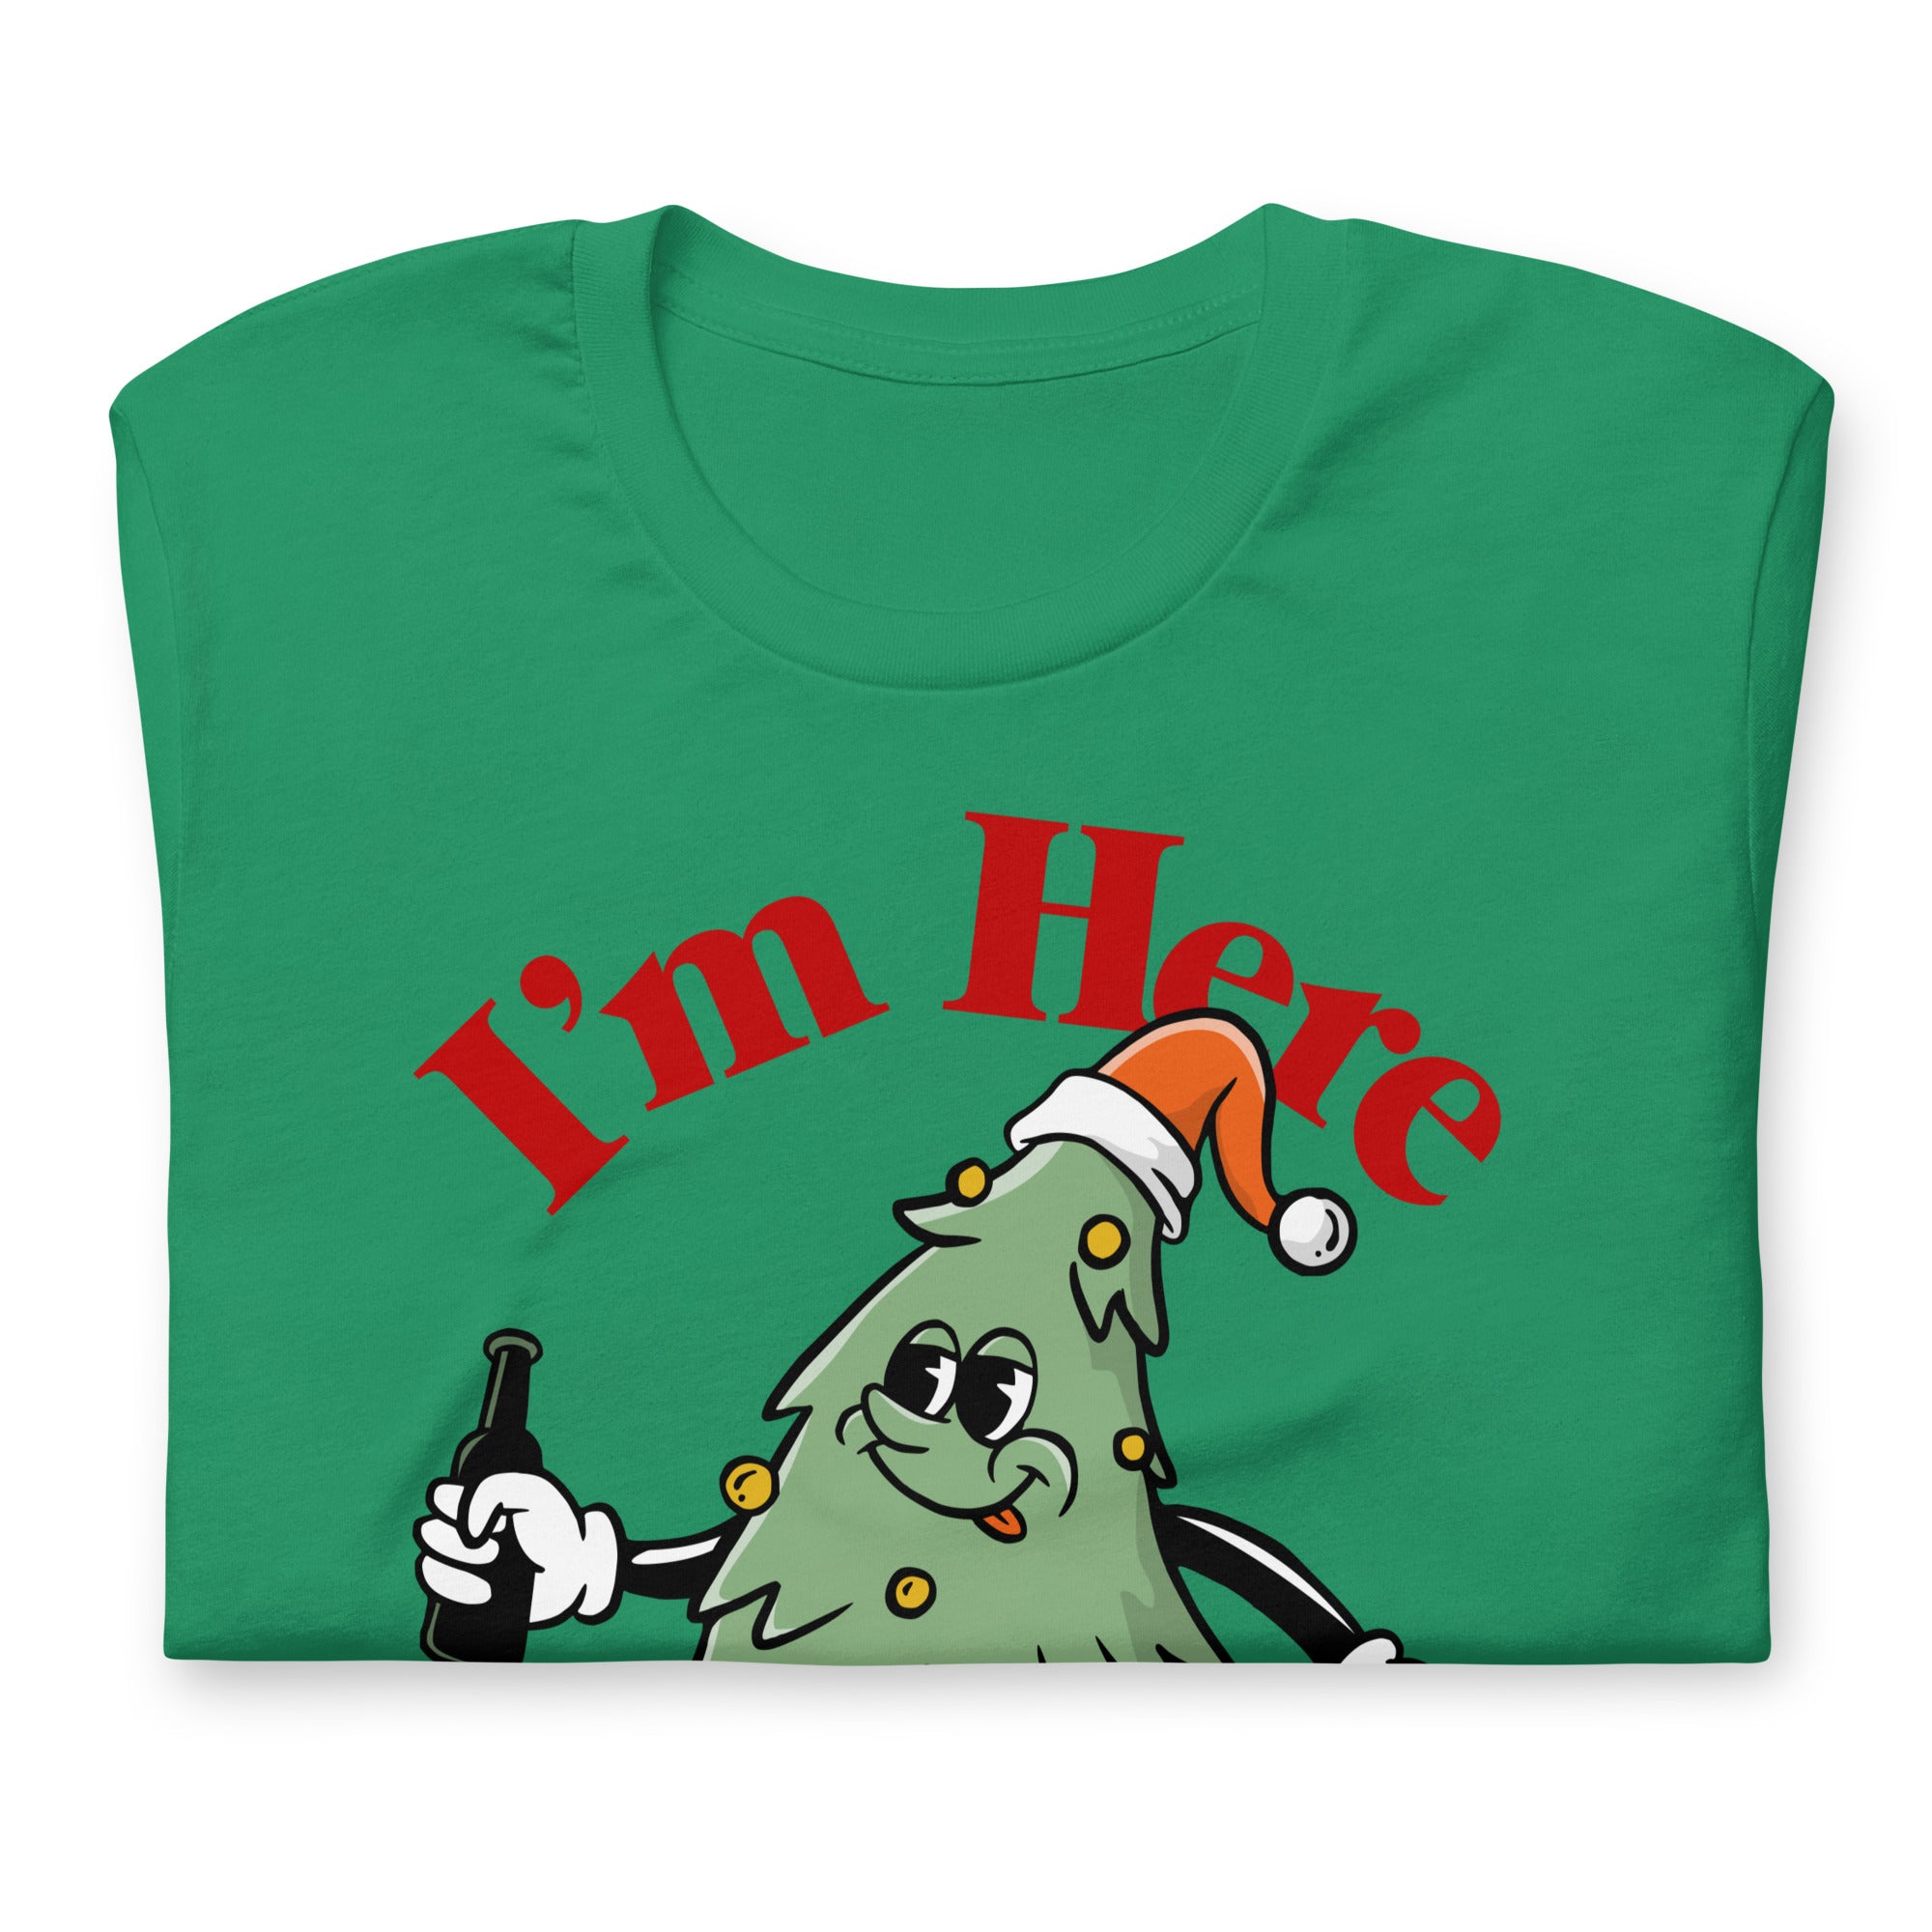 I'm Here to Get Lit Christmas Tree T-Shirt